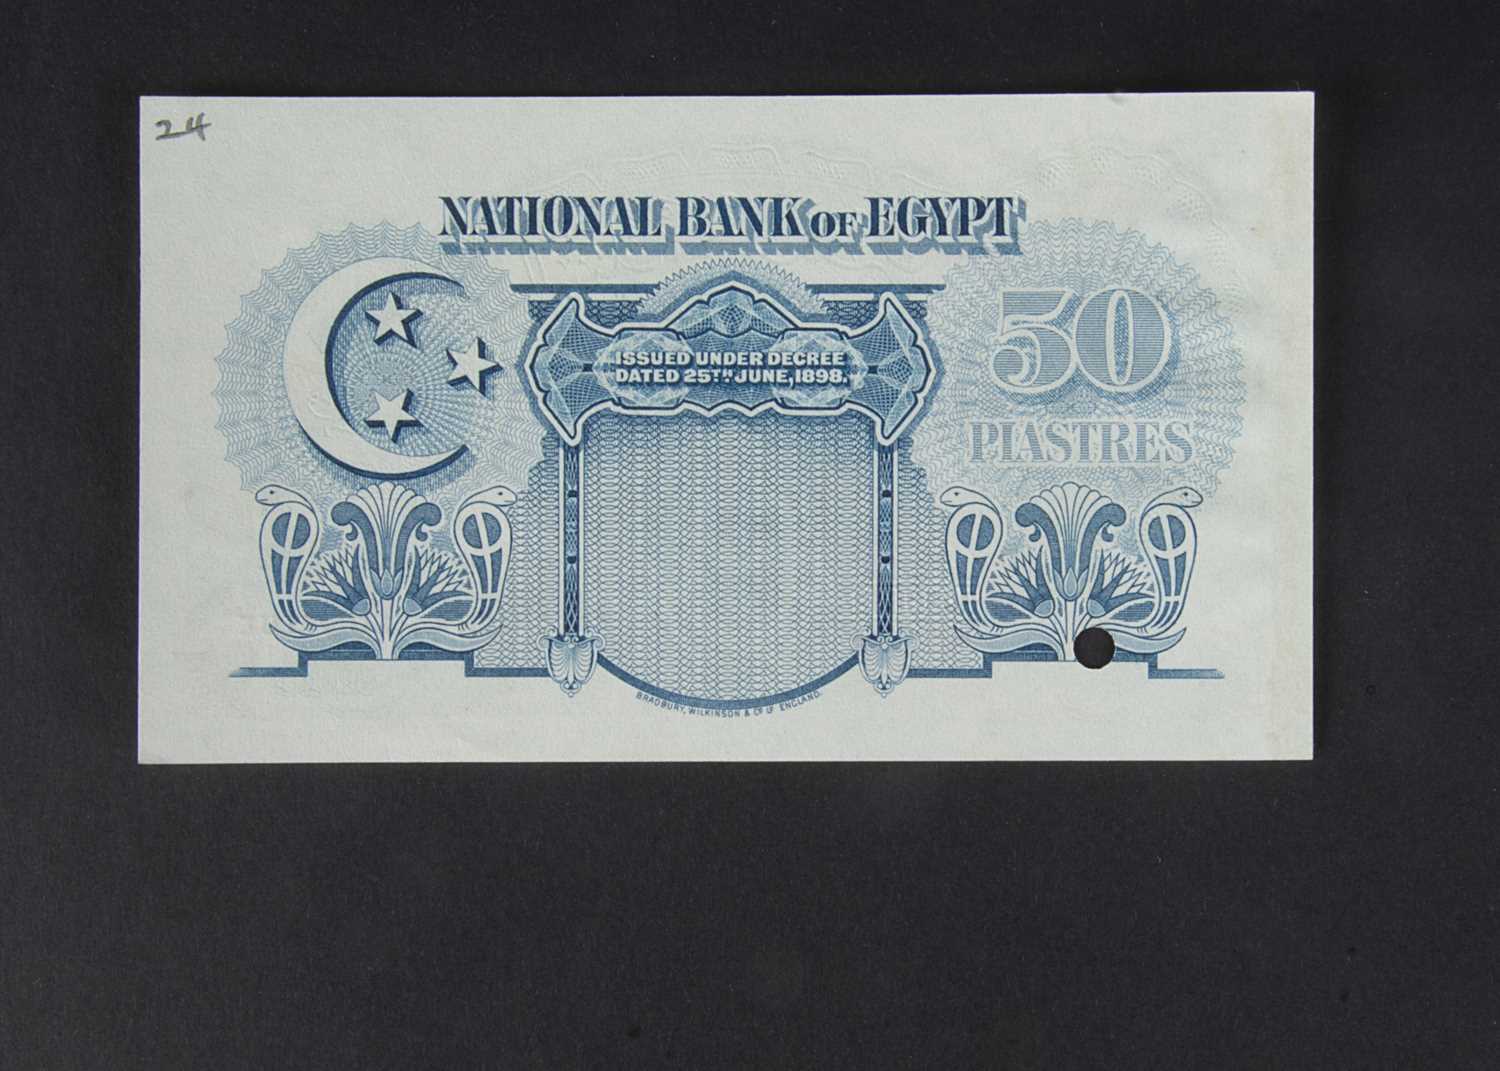 Specimen Bank Note: National Bank of Egypt specimen 50 Piastres, - Image 2 of 2